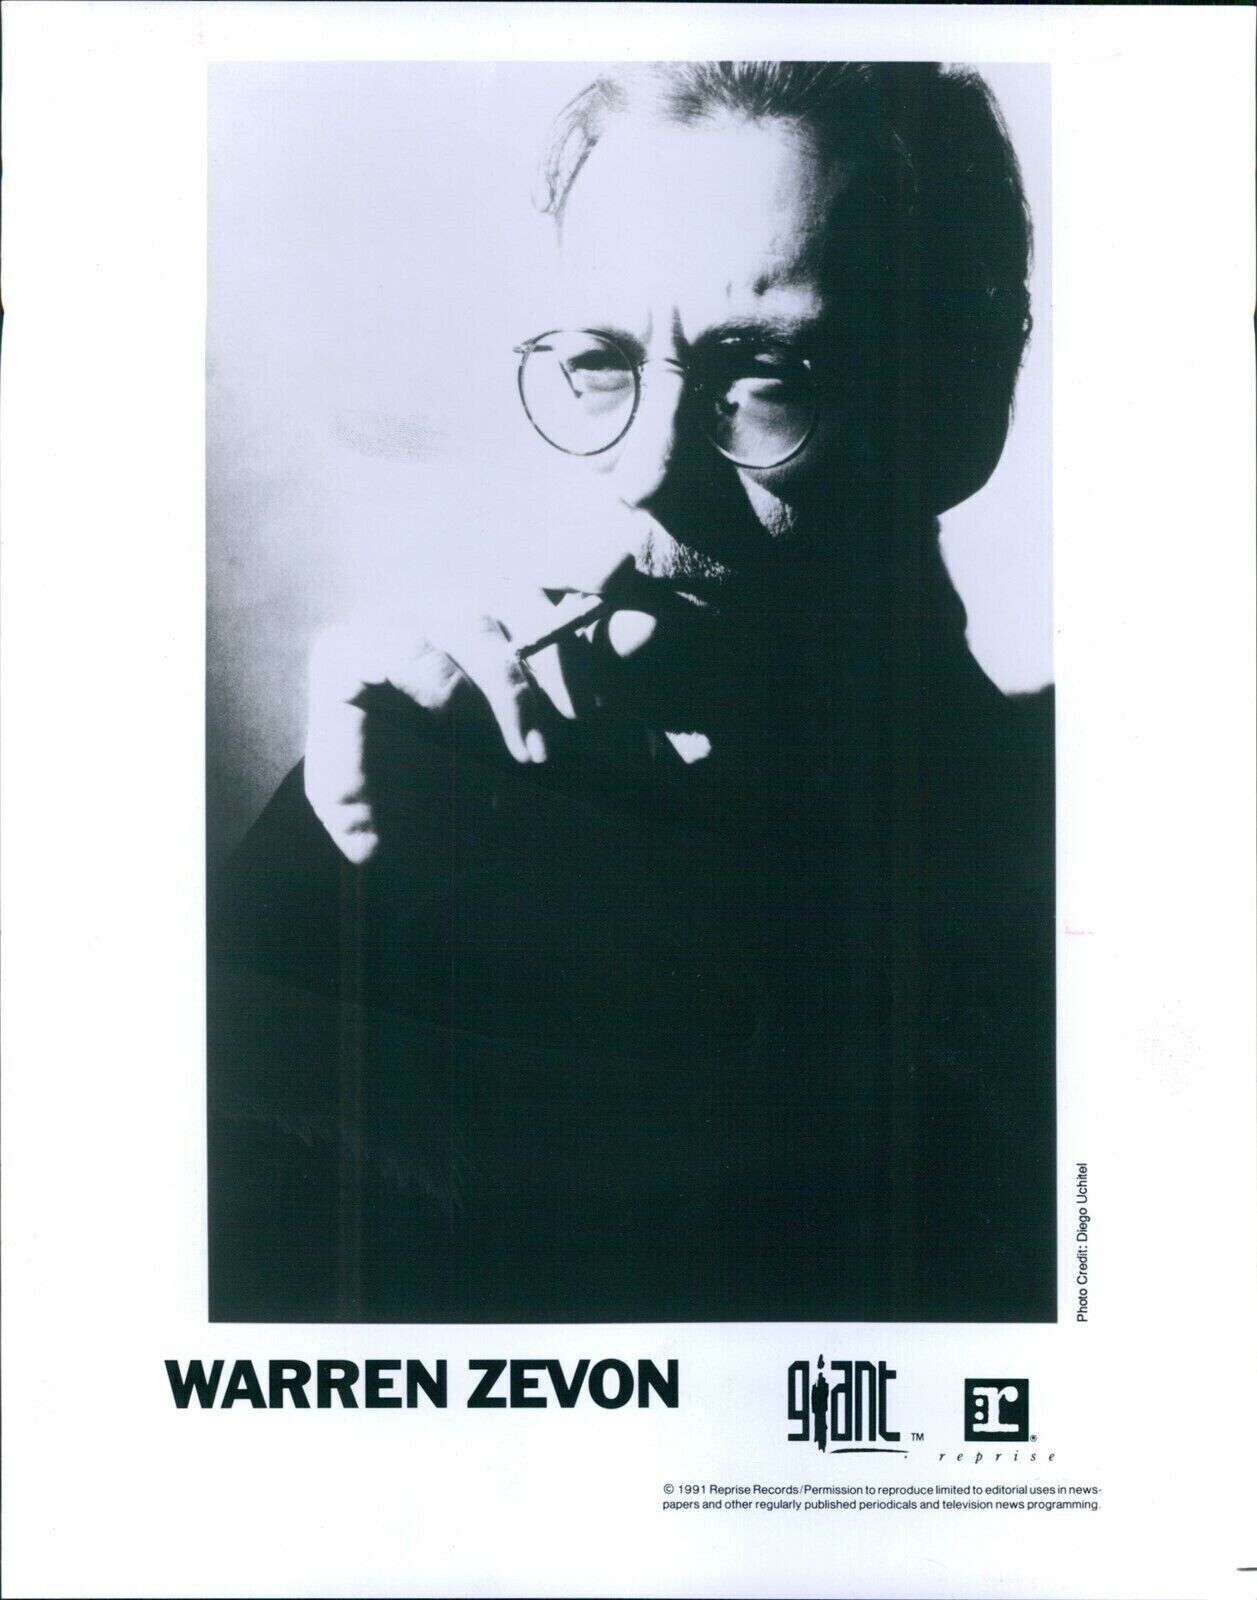 1991 Musician Warren Zevon Rock Songwriter Singer Giant Records 8X10 Press Photo